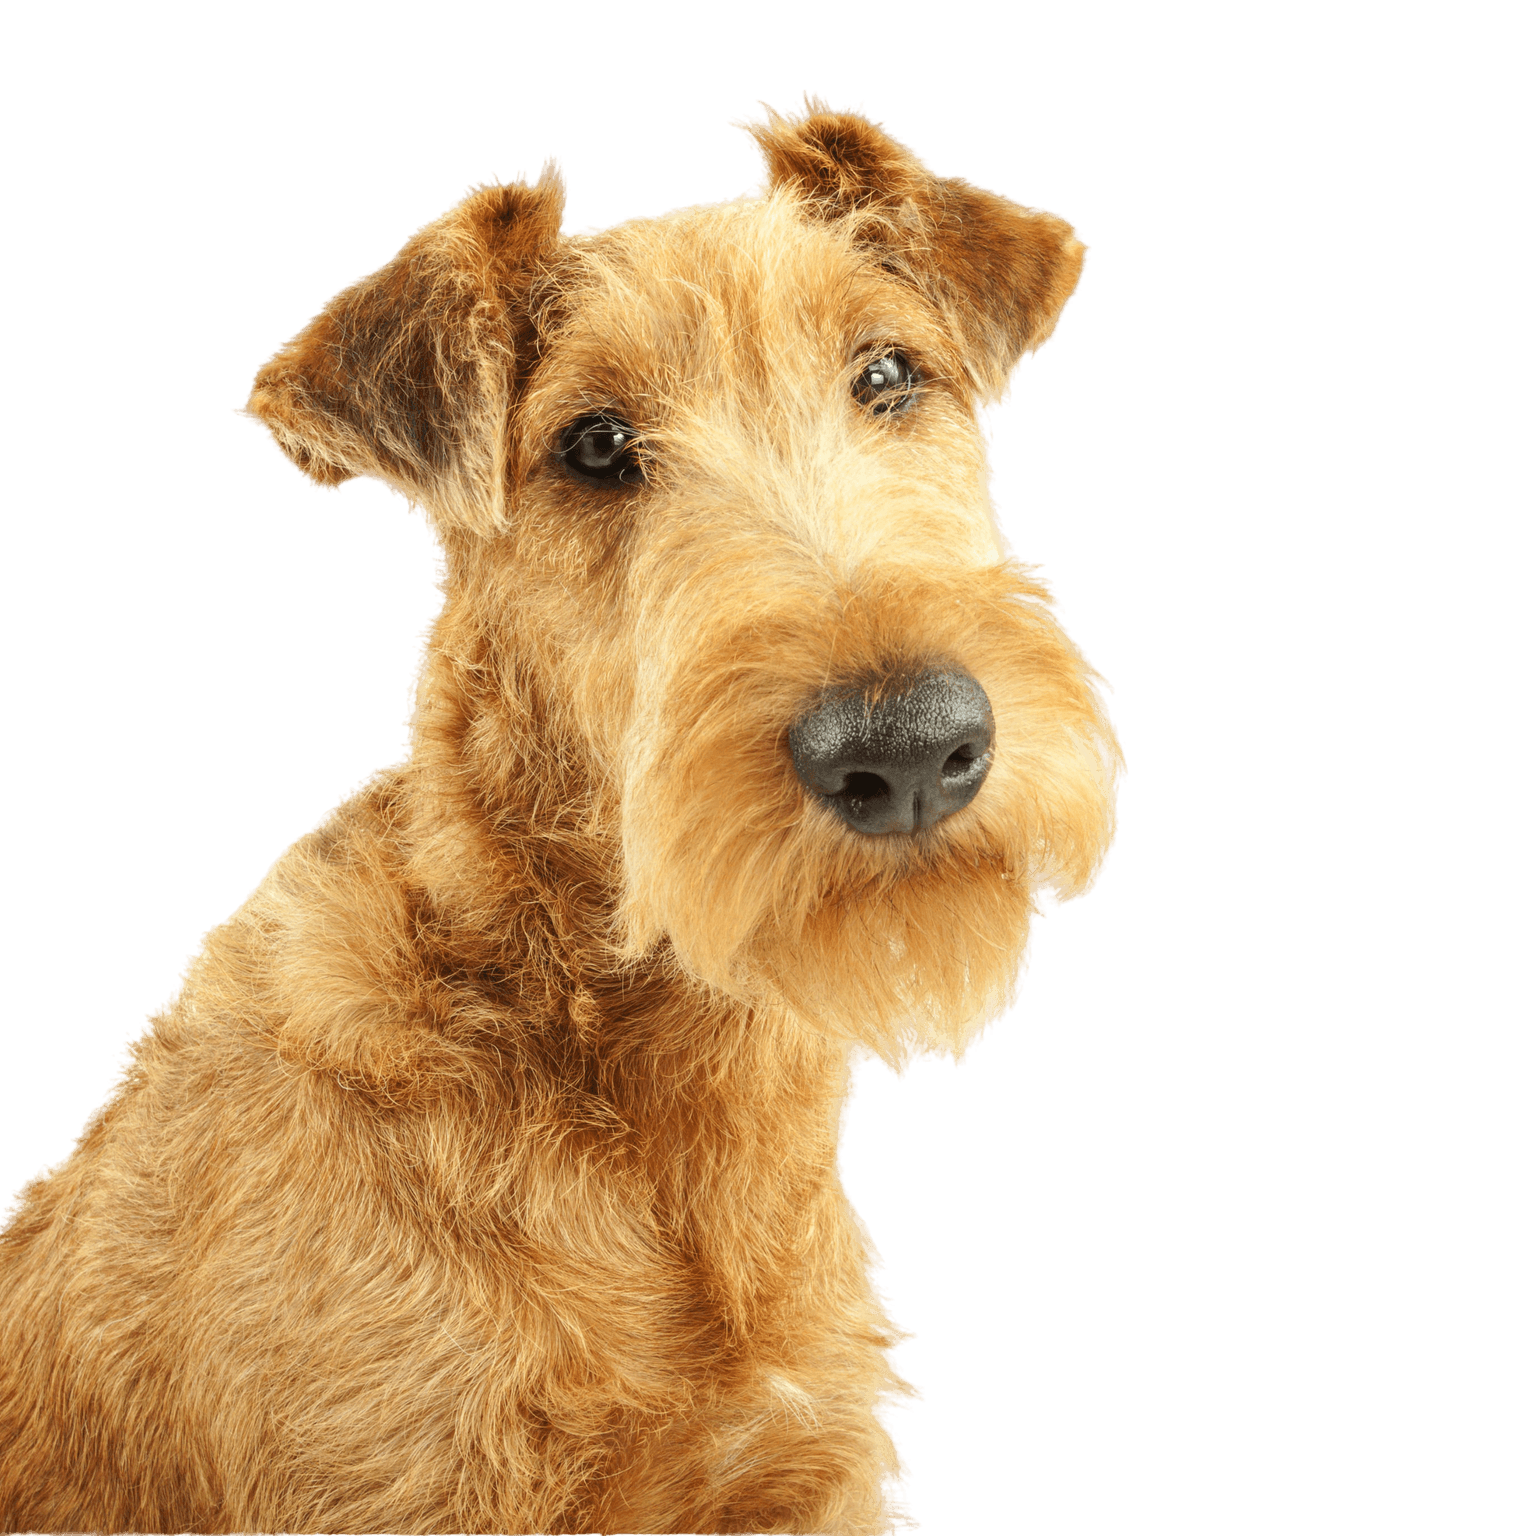 Irish Terrier breed description